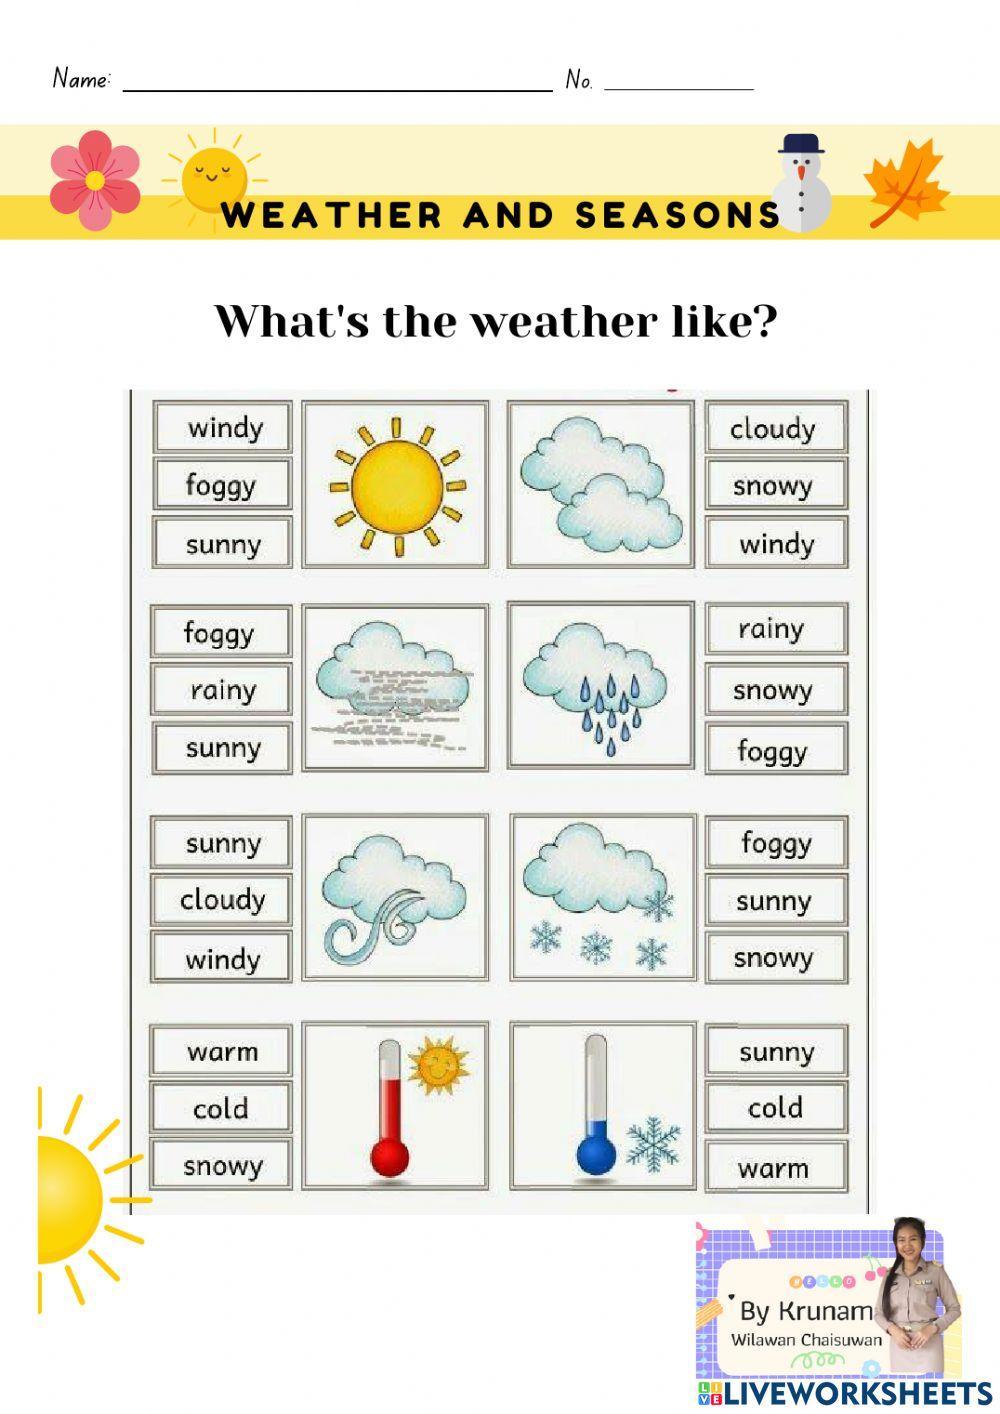 Worksheet 1 Weather and season